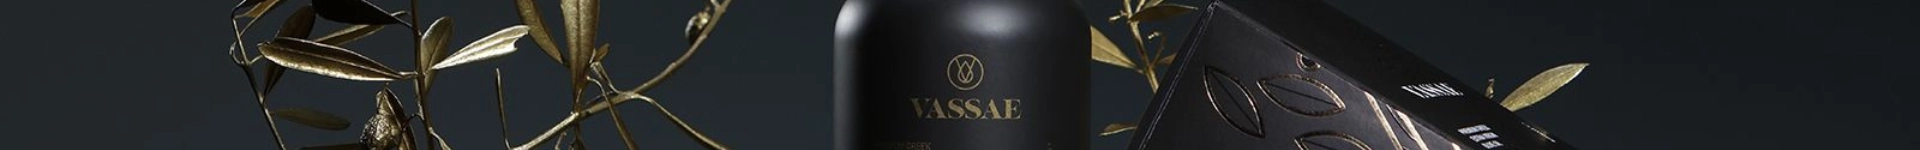 Vassae - Premium Greek Extra Virgin Olive Oils background